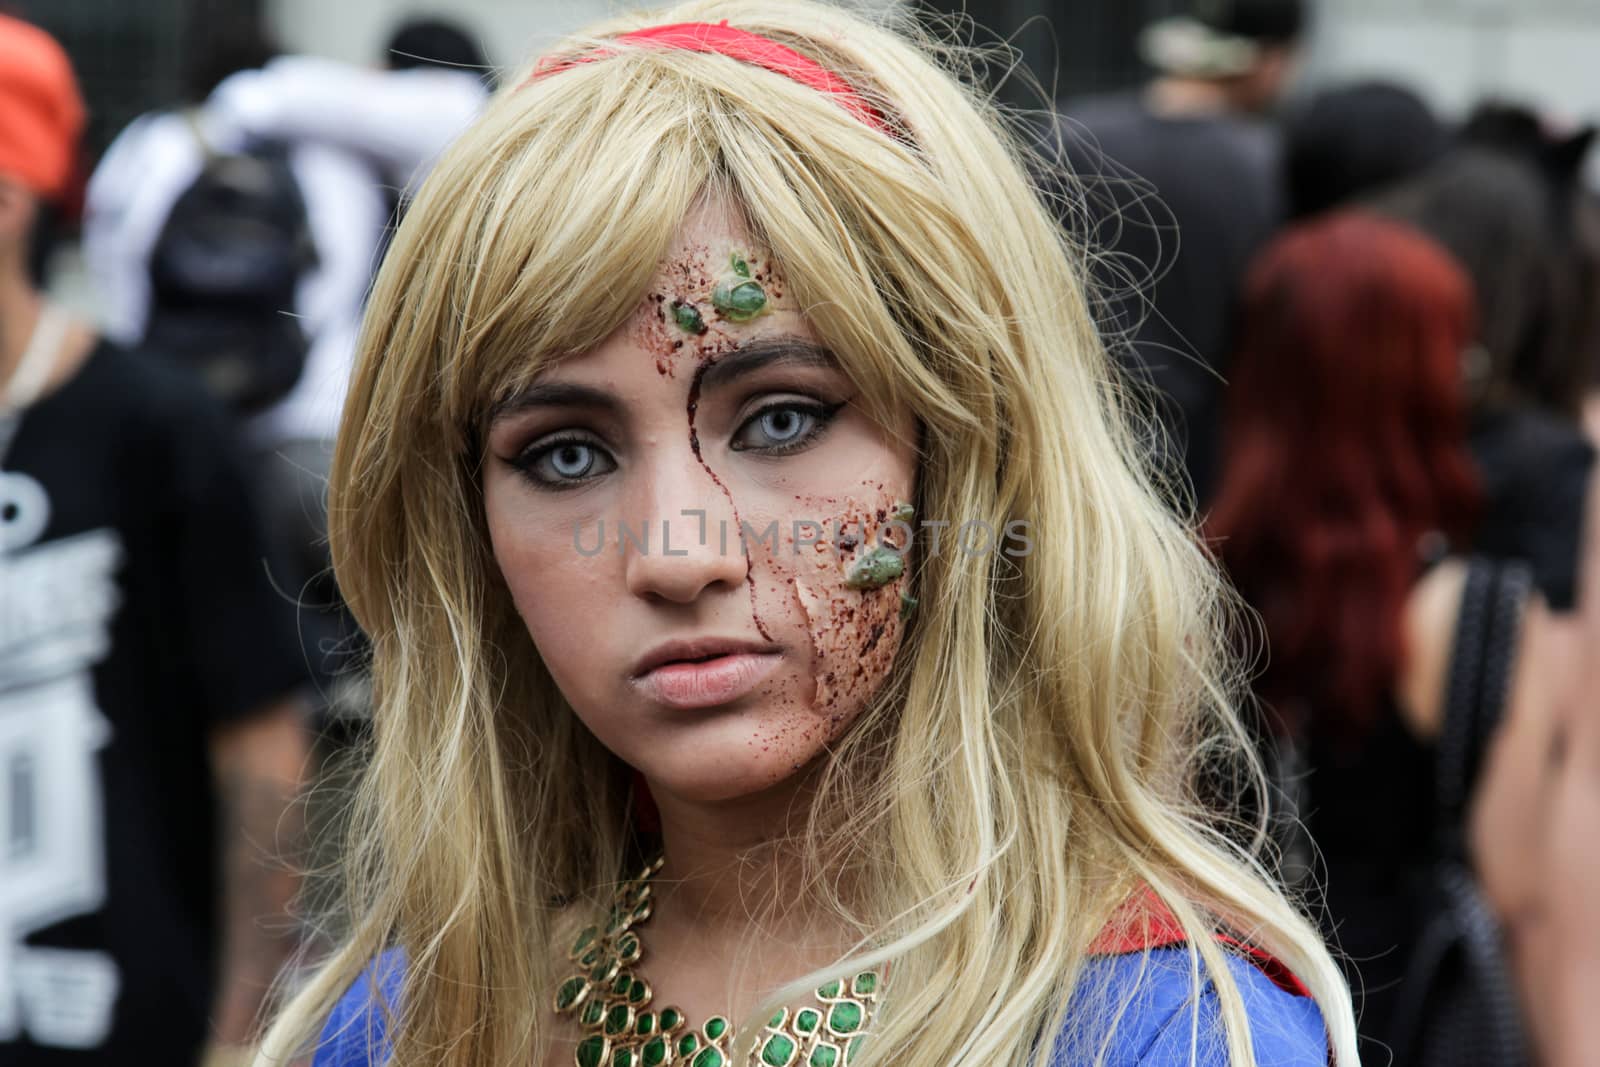 Sao Paulo, Brazil November 11 2015: An unidentified girl in Super Woman costumes in the annual event Zombie Walk in Sao Paulo Brazil.